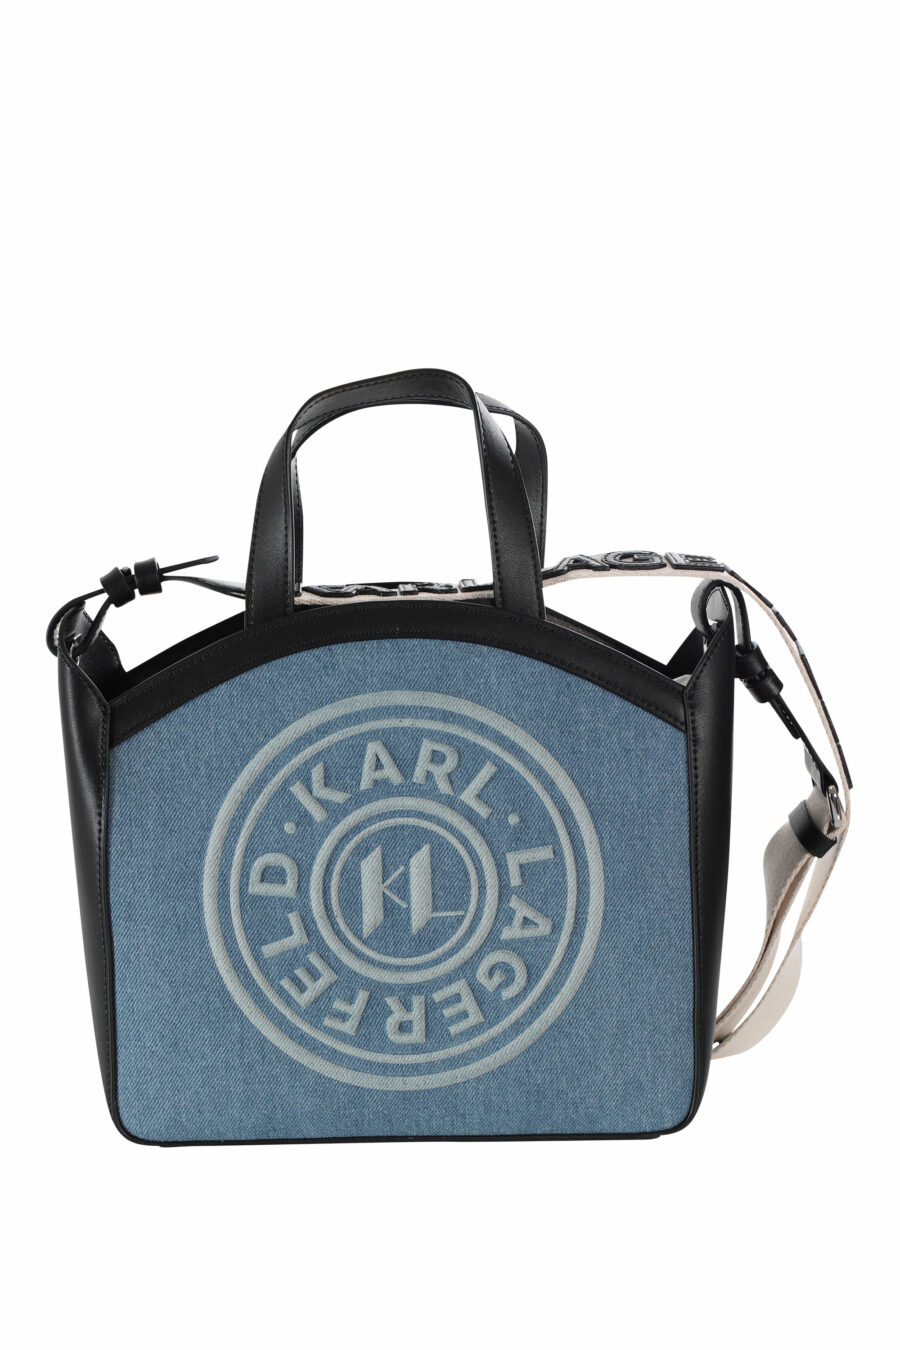 Blue tote bag with monochrome "k/circle" logo - 8720744234722